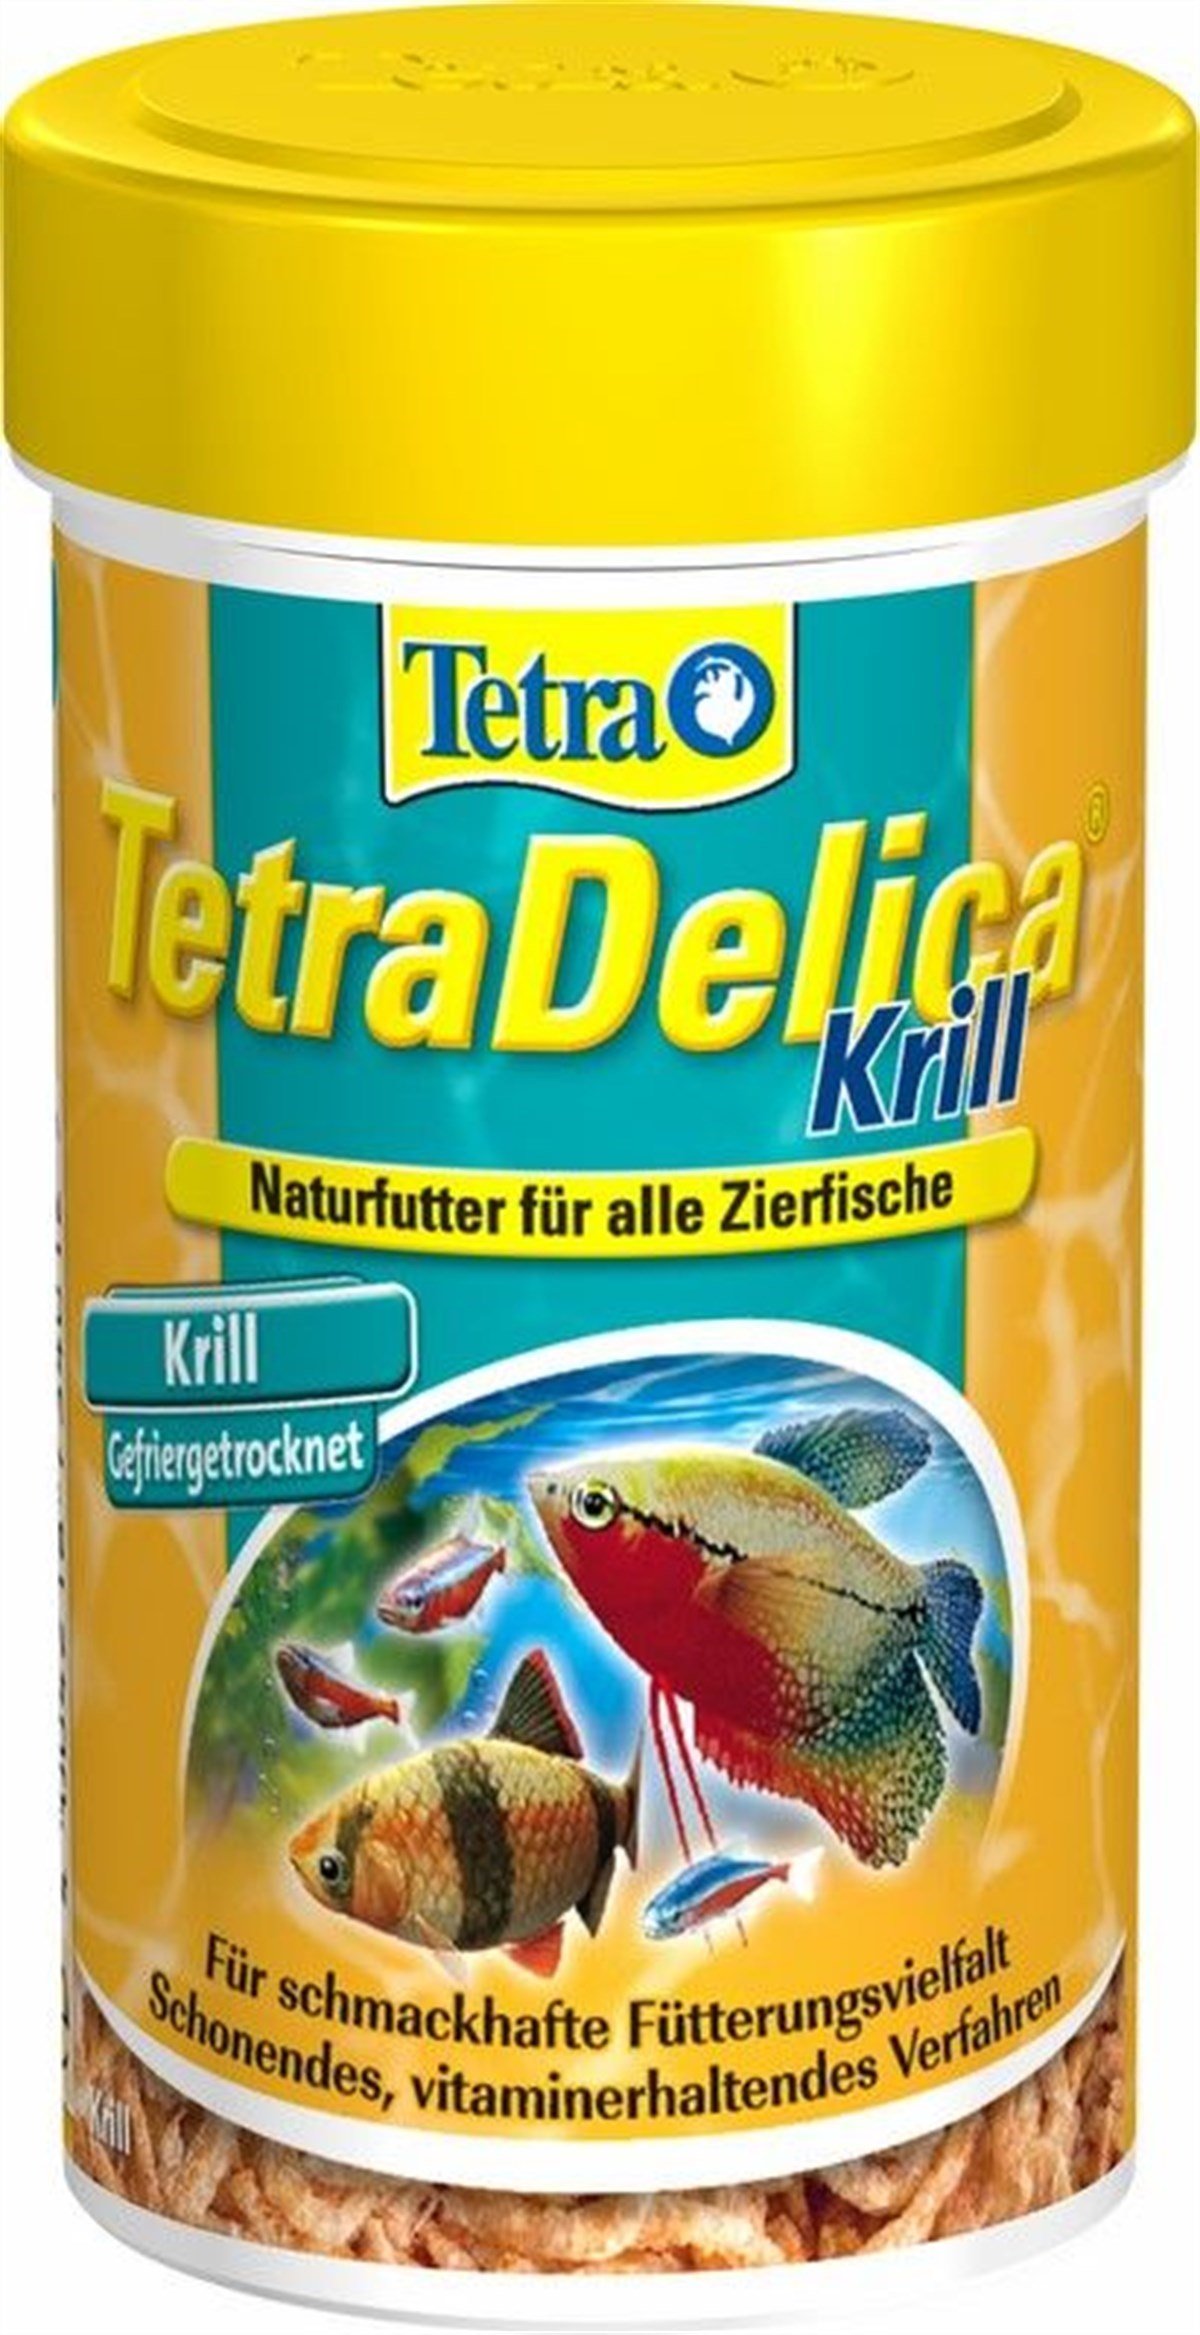 Tetra Delica Krill: Tetra